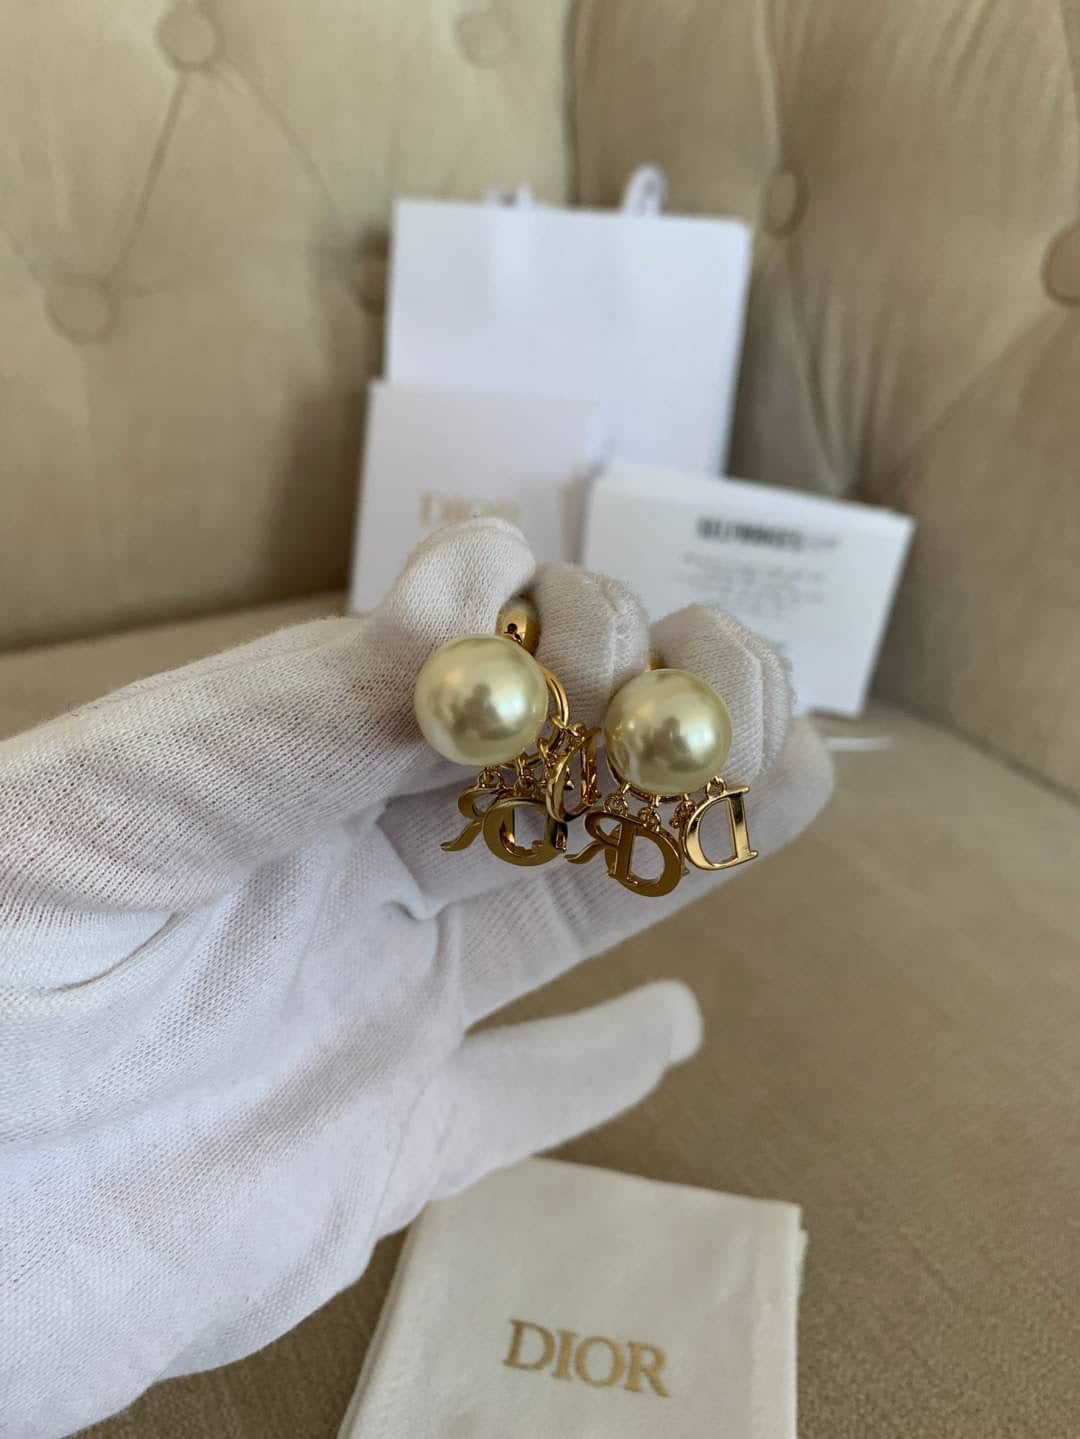 Dior Tribales Earrings 字母墜飾珍珠耳環/510E570 🉐20950🇪🇺